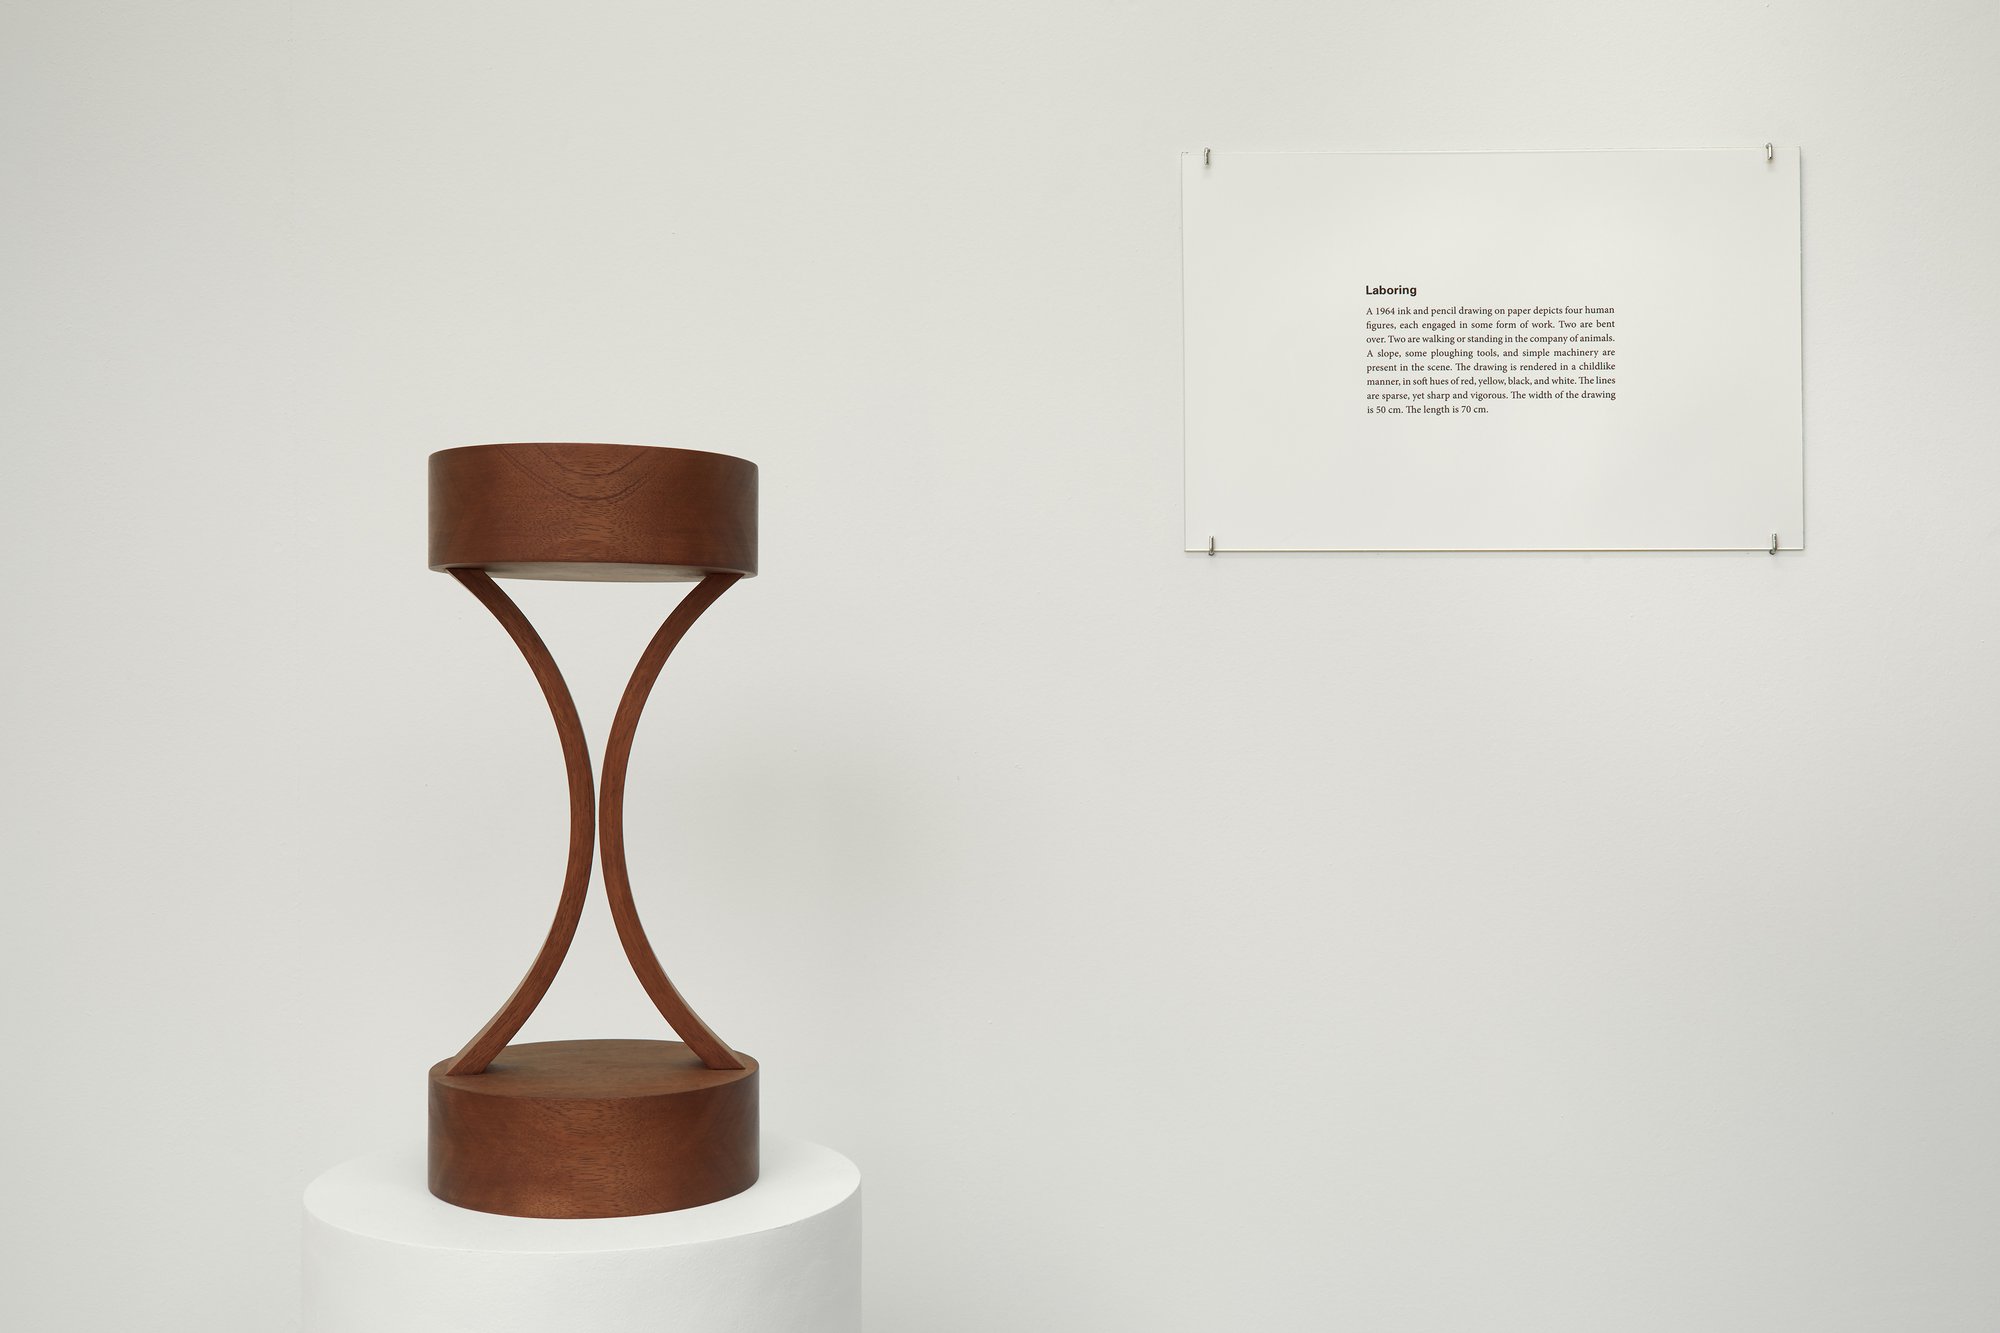 Iman Issa, Labouring (study for 2012), mahogany sculpture, text panel under glass, white plinth, sculpture: 39.4, Ø 18 cm (15 1/2, Ø 7 in), plinth: 95.2 x Ø 30 cm (37 1/2 x Ø11 3/4 in), 2012